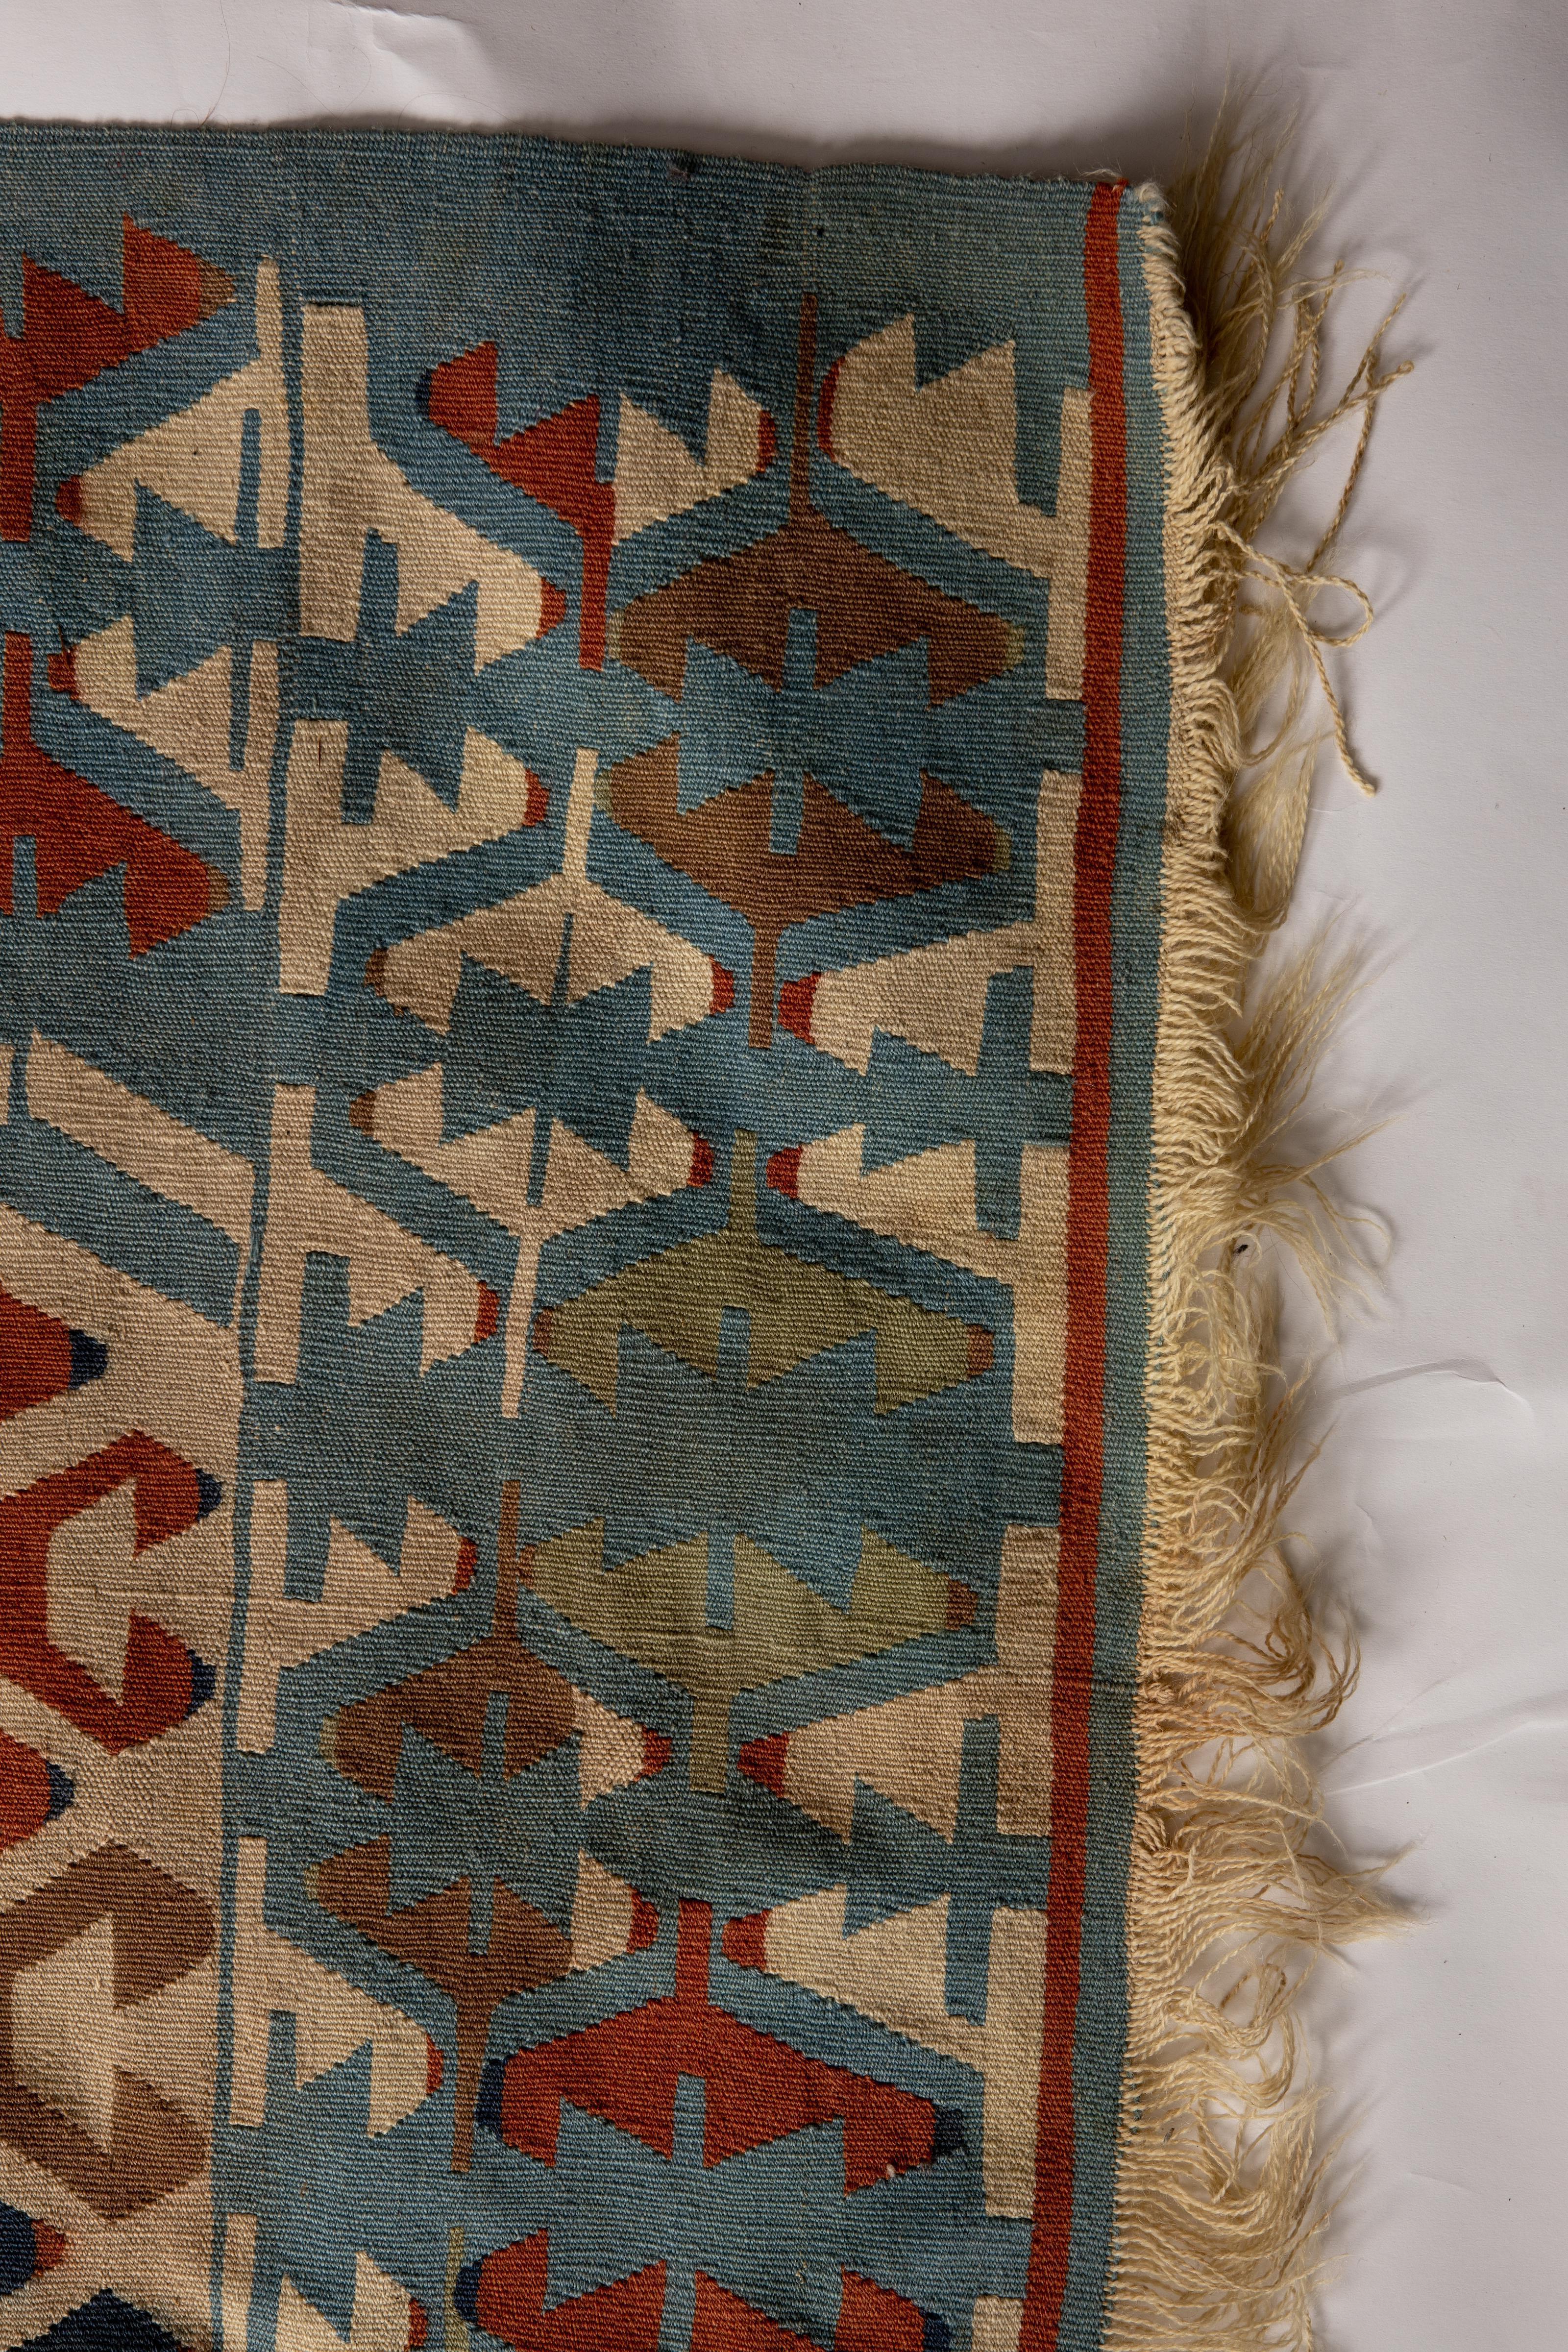 Hand-Woven Anatolian Ornate Design Handwoven Wool Kilim Rug For Sale